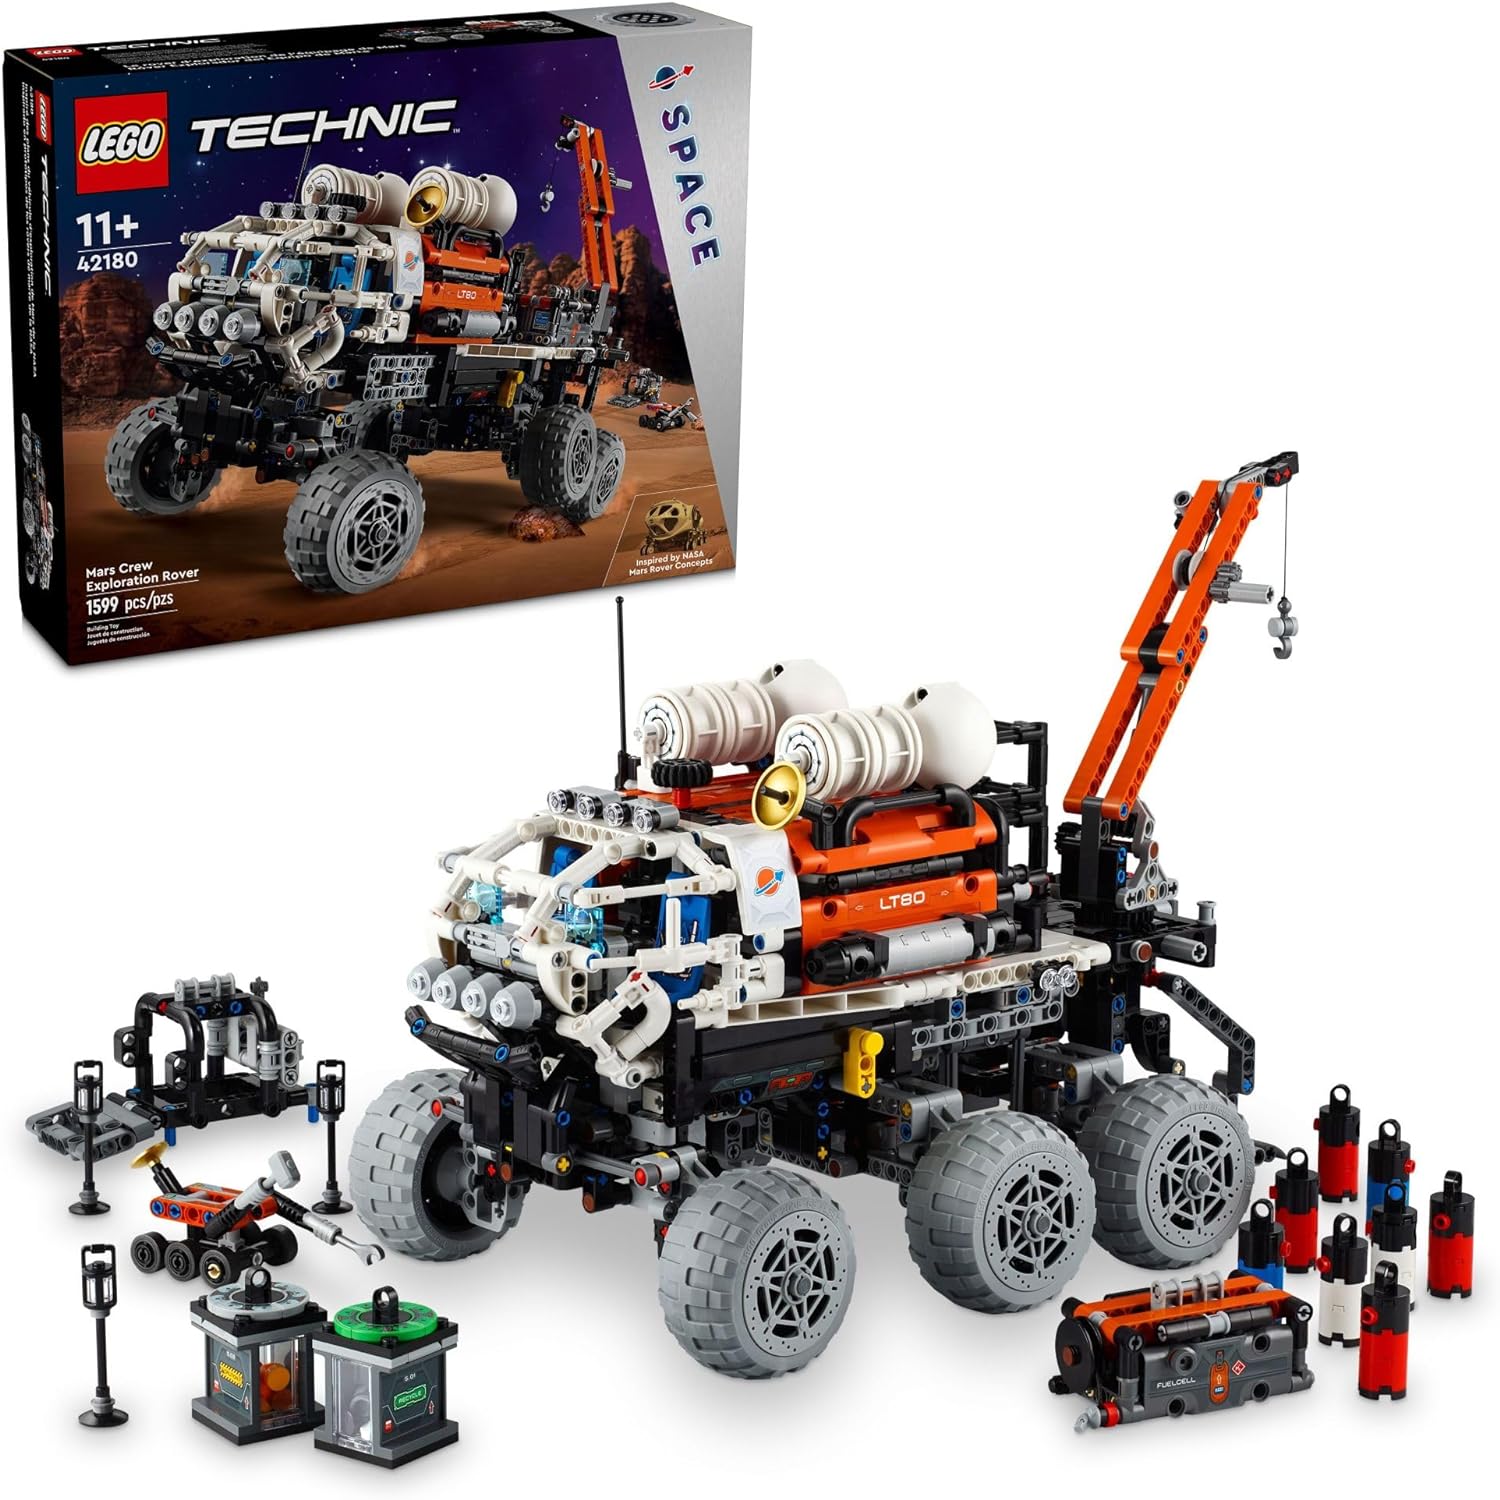 LEGO Technic 42180 Mars Crew Exploration Rover Building Set